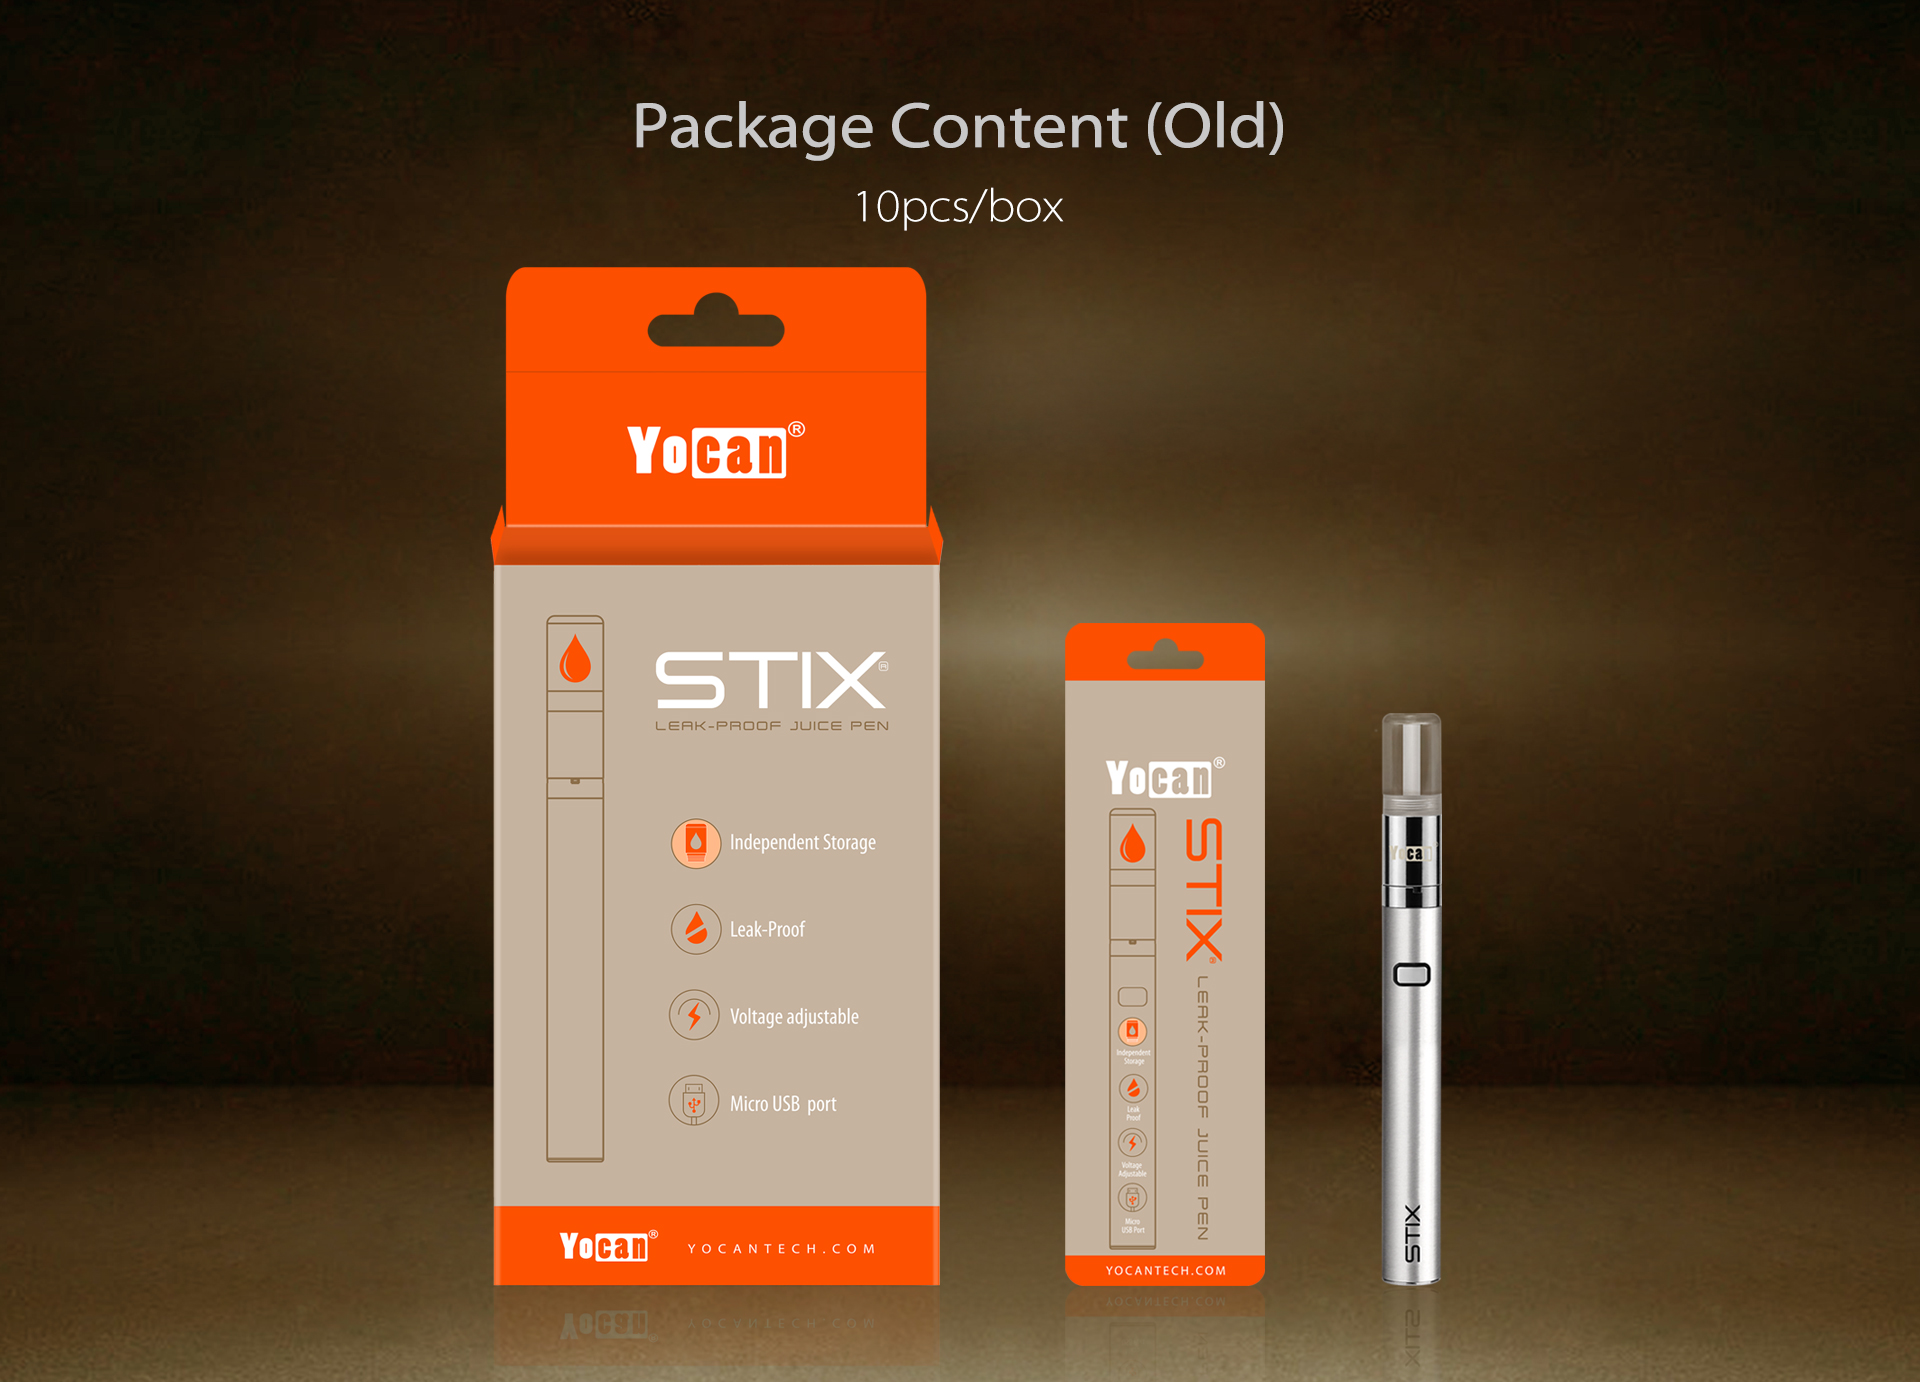 Yocan STIX vape pen package content.